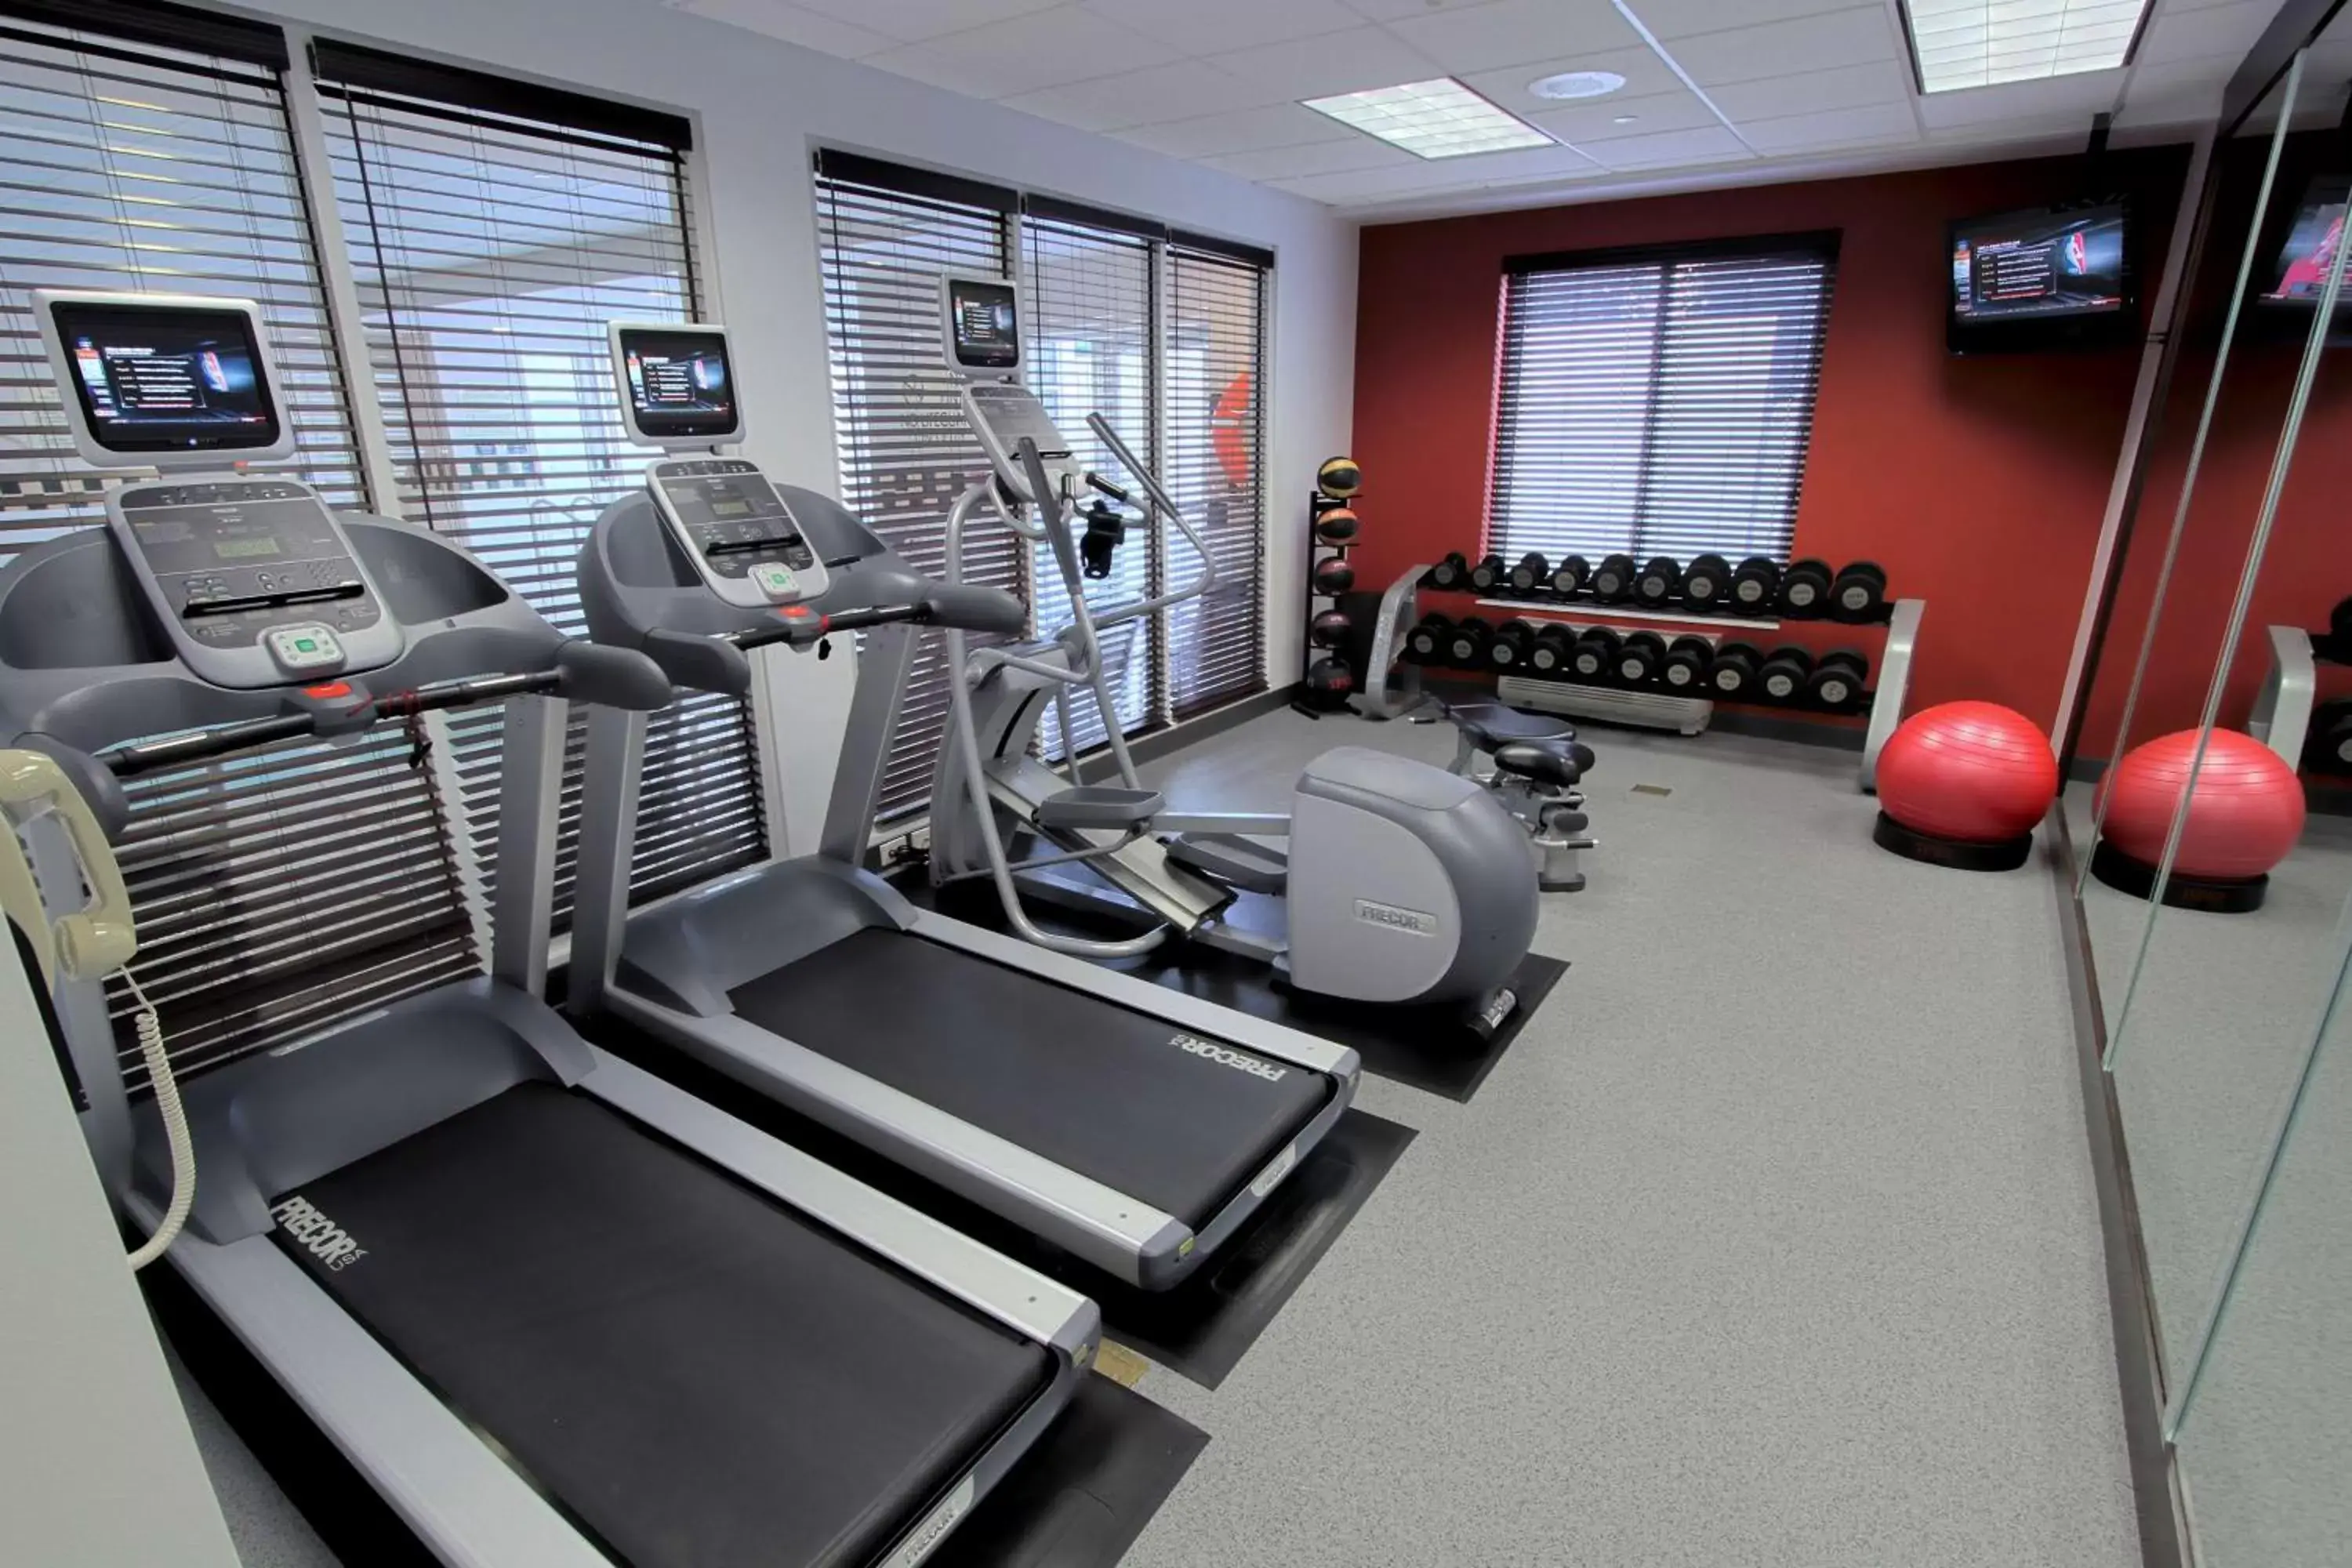 Fitness centre/facilities, Fitness Center/Facilities in Hilton Garden Inn Westbury